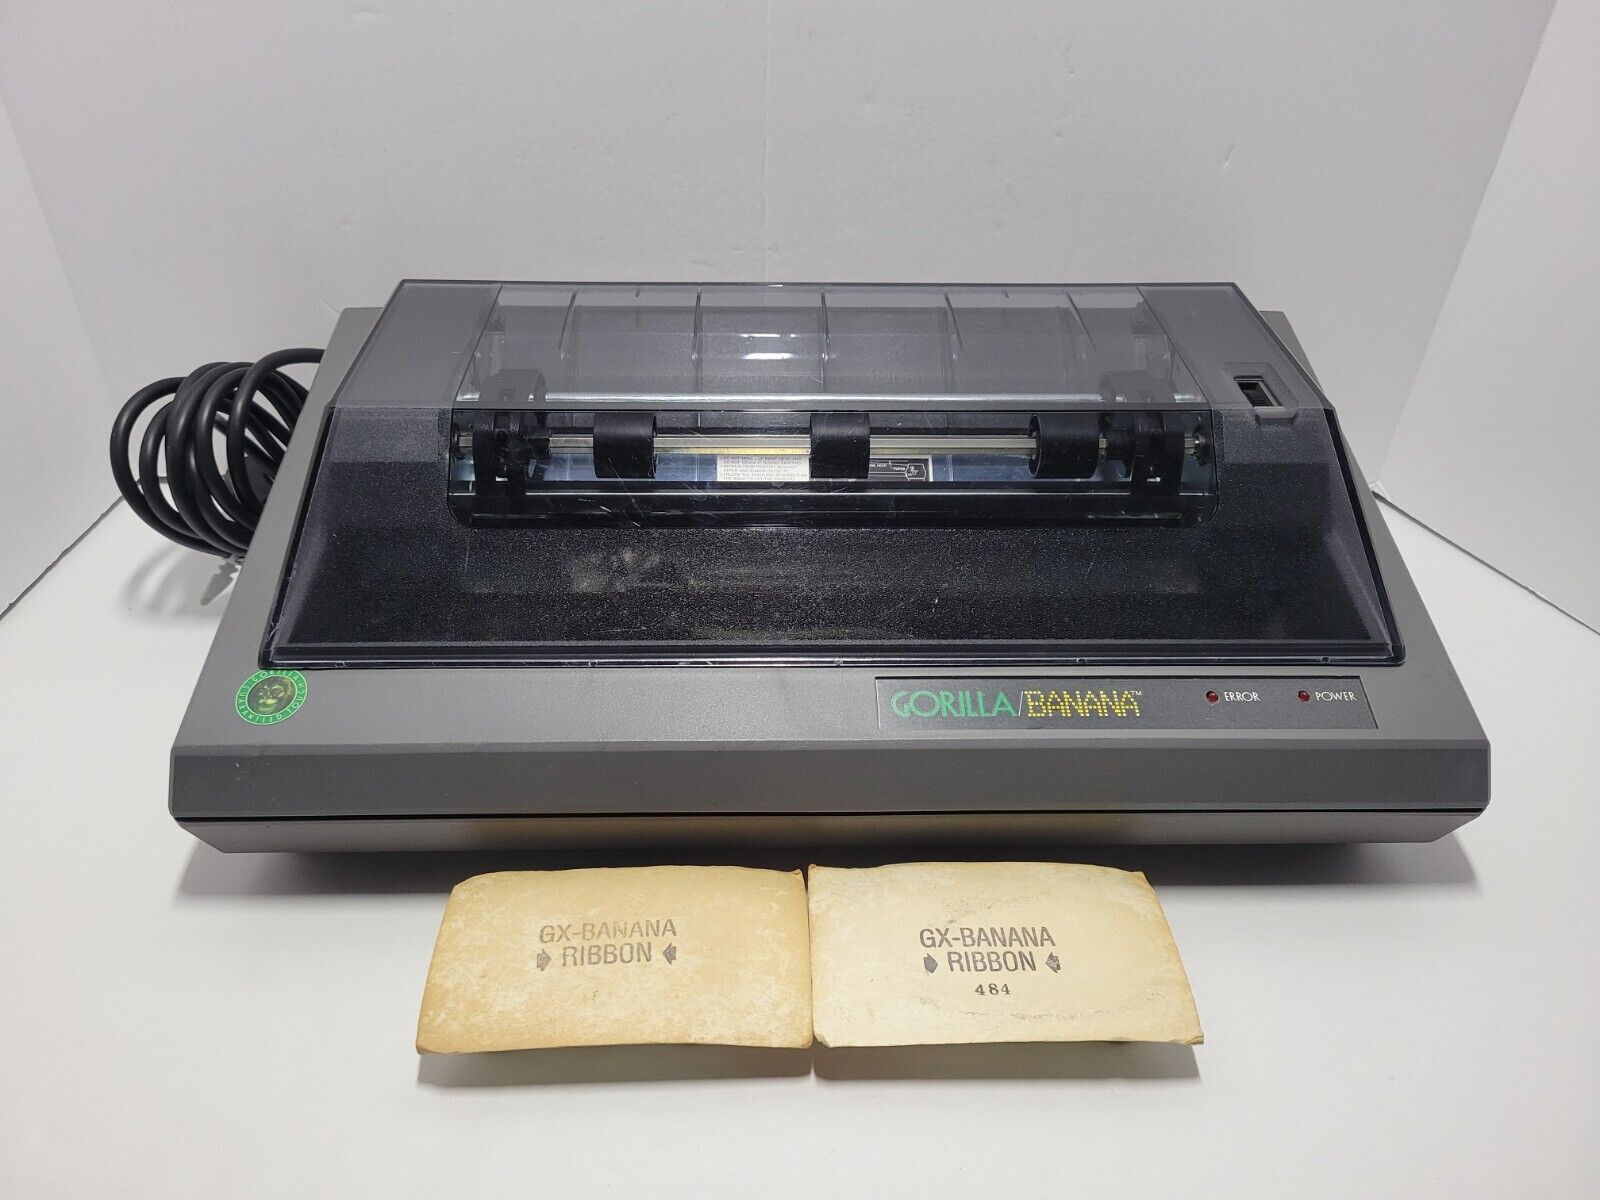 Vintage Gorilla Banana Dot Matrix Computer Printer Leading Edge 2 Ribbons GX-100